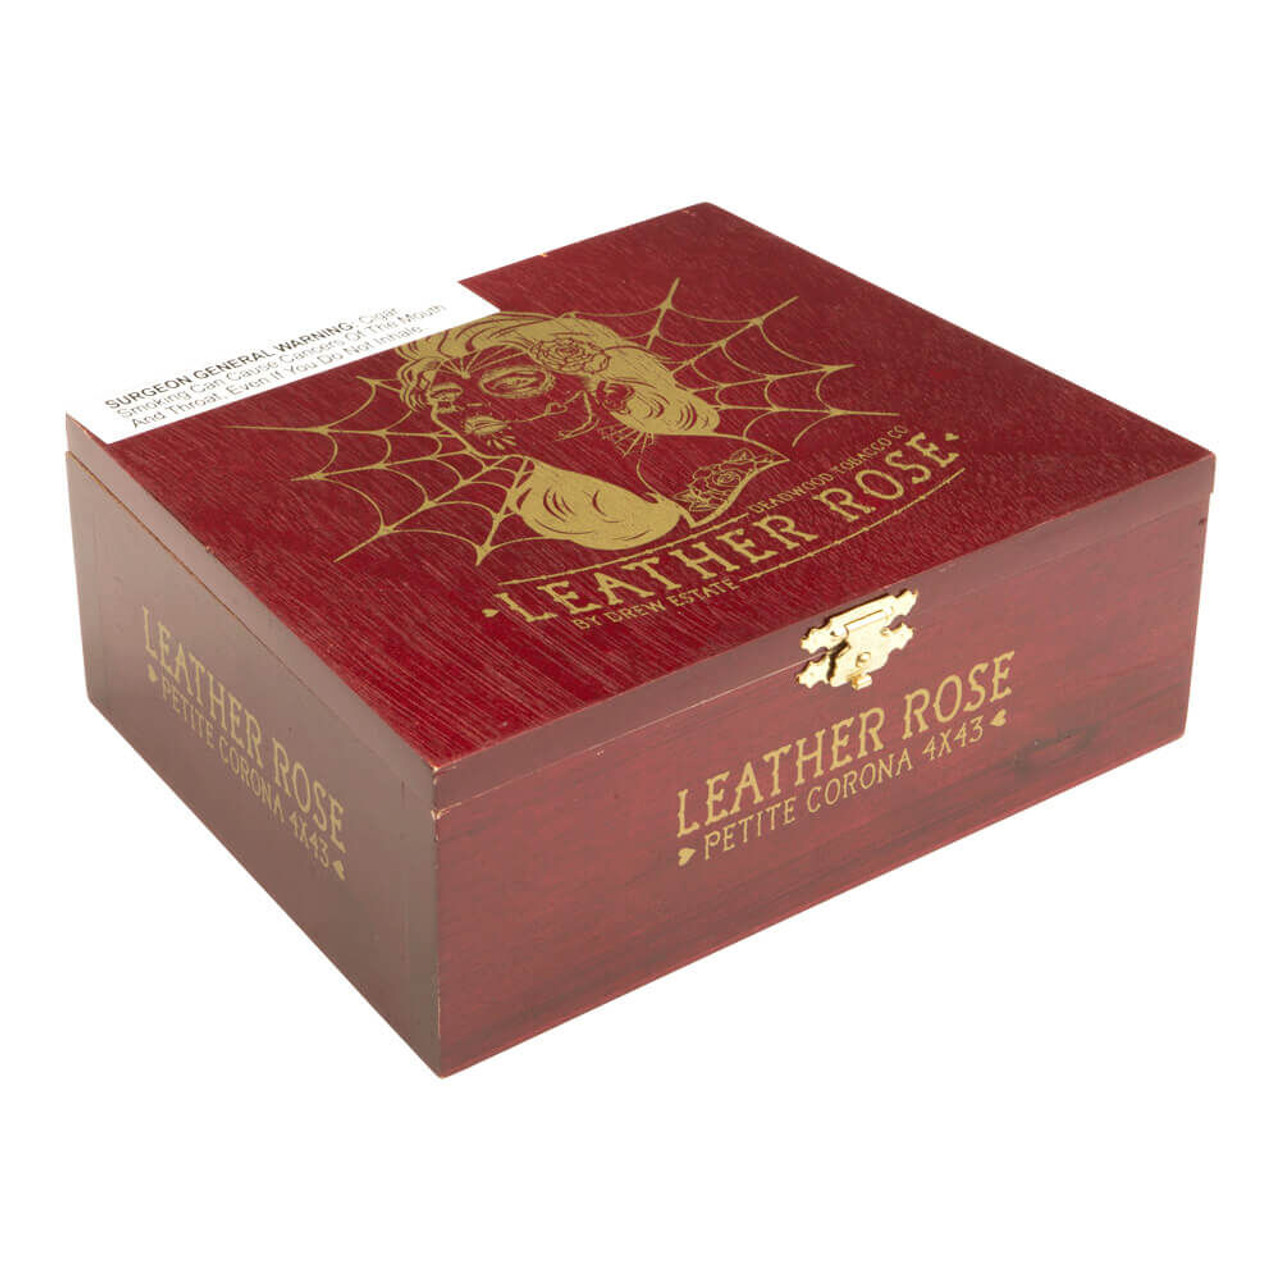 Deadwood Tobacco Co. Leather Rose Peitie Corona Cigars - 4 x 43 (Box of 24) *Box